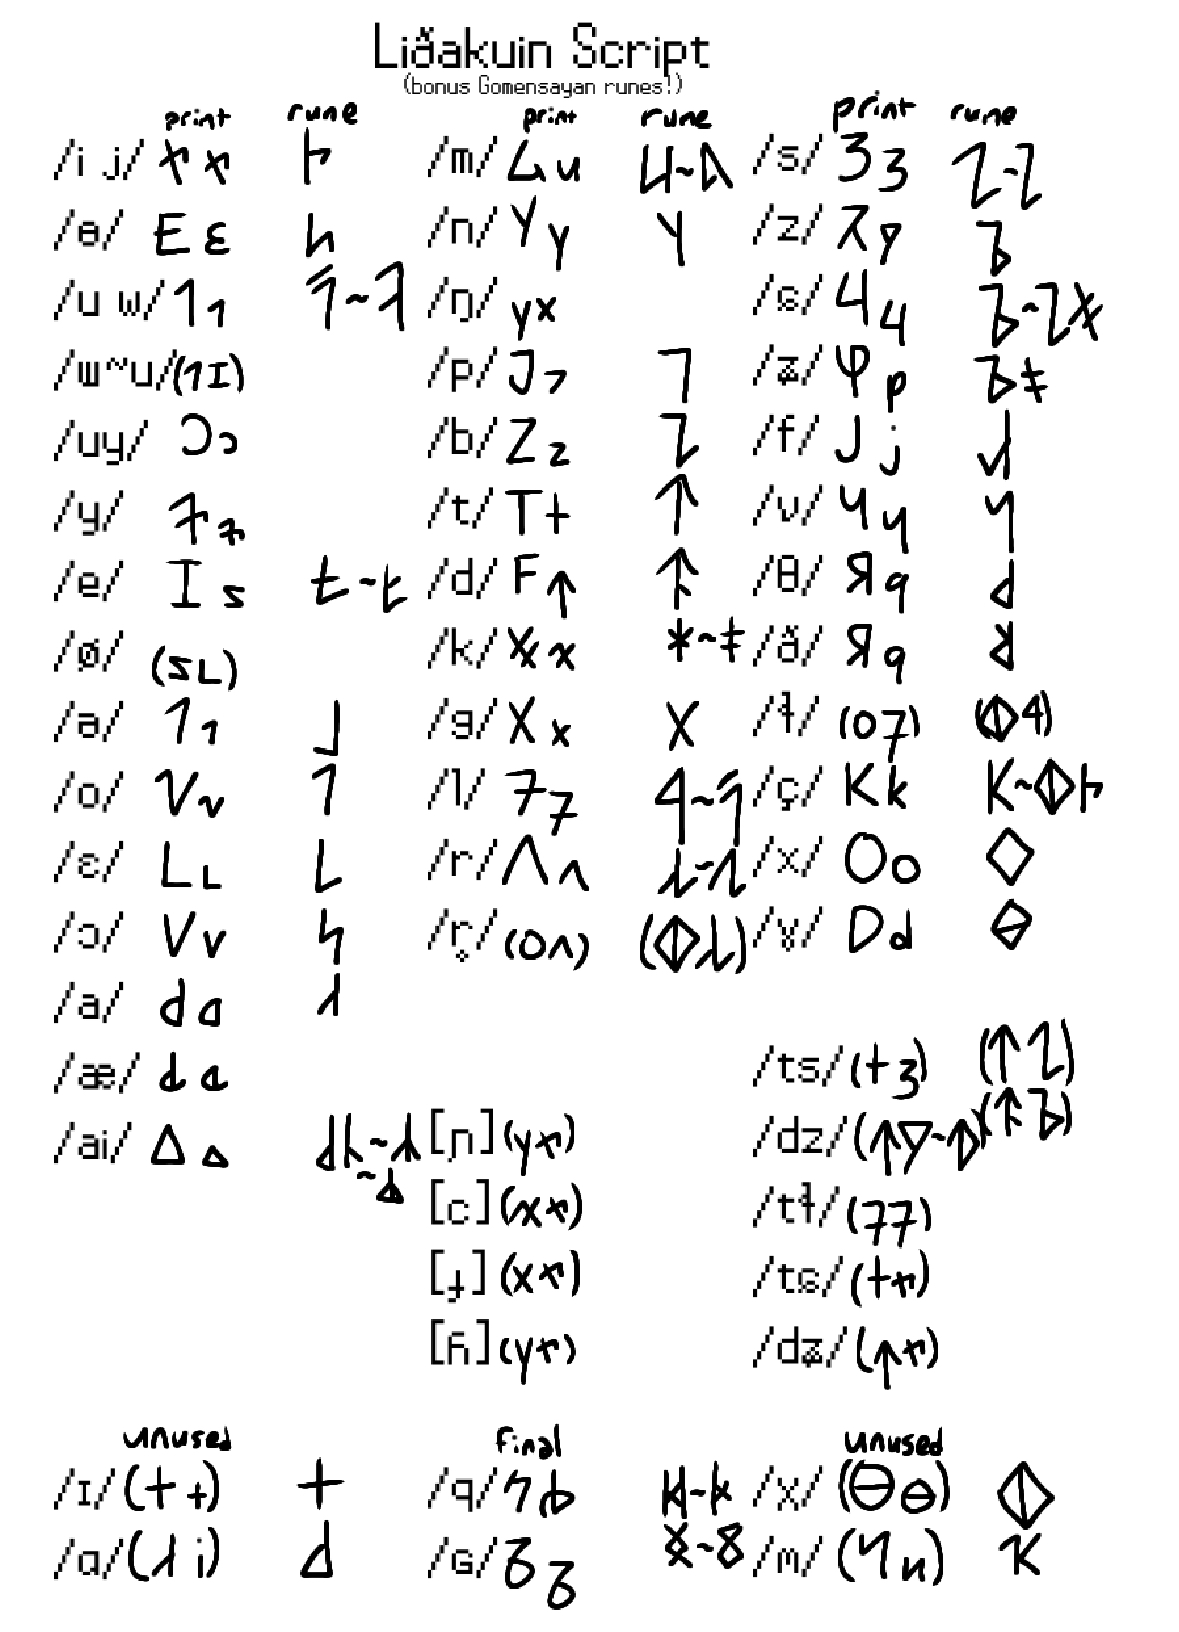 Liðakuin script